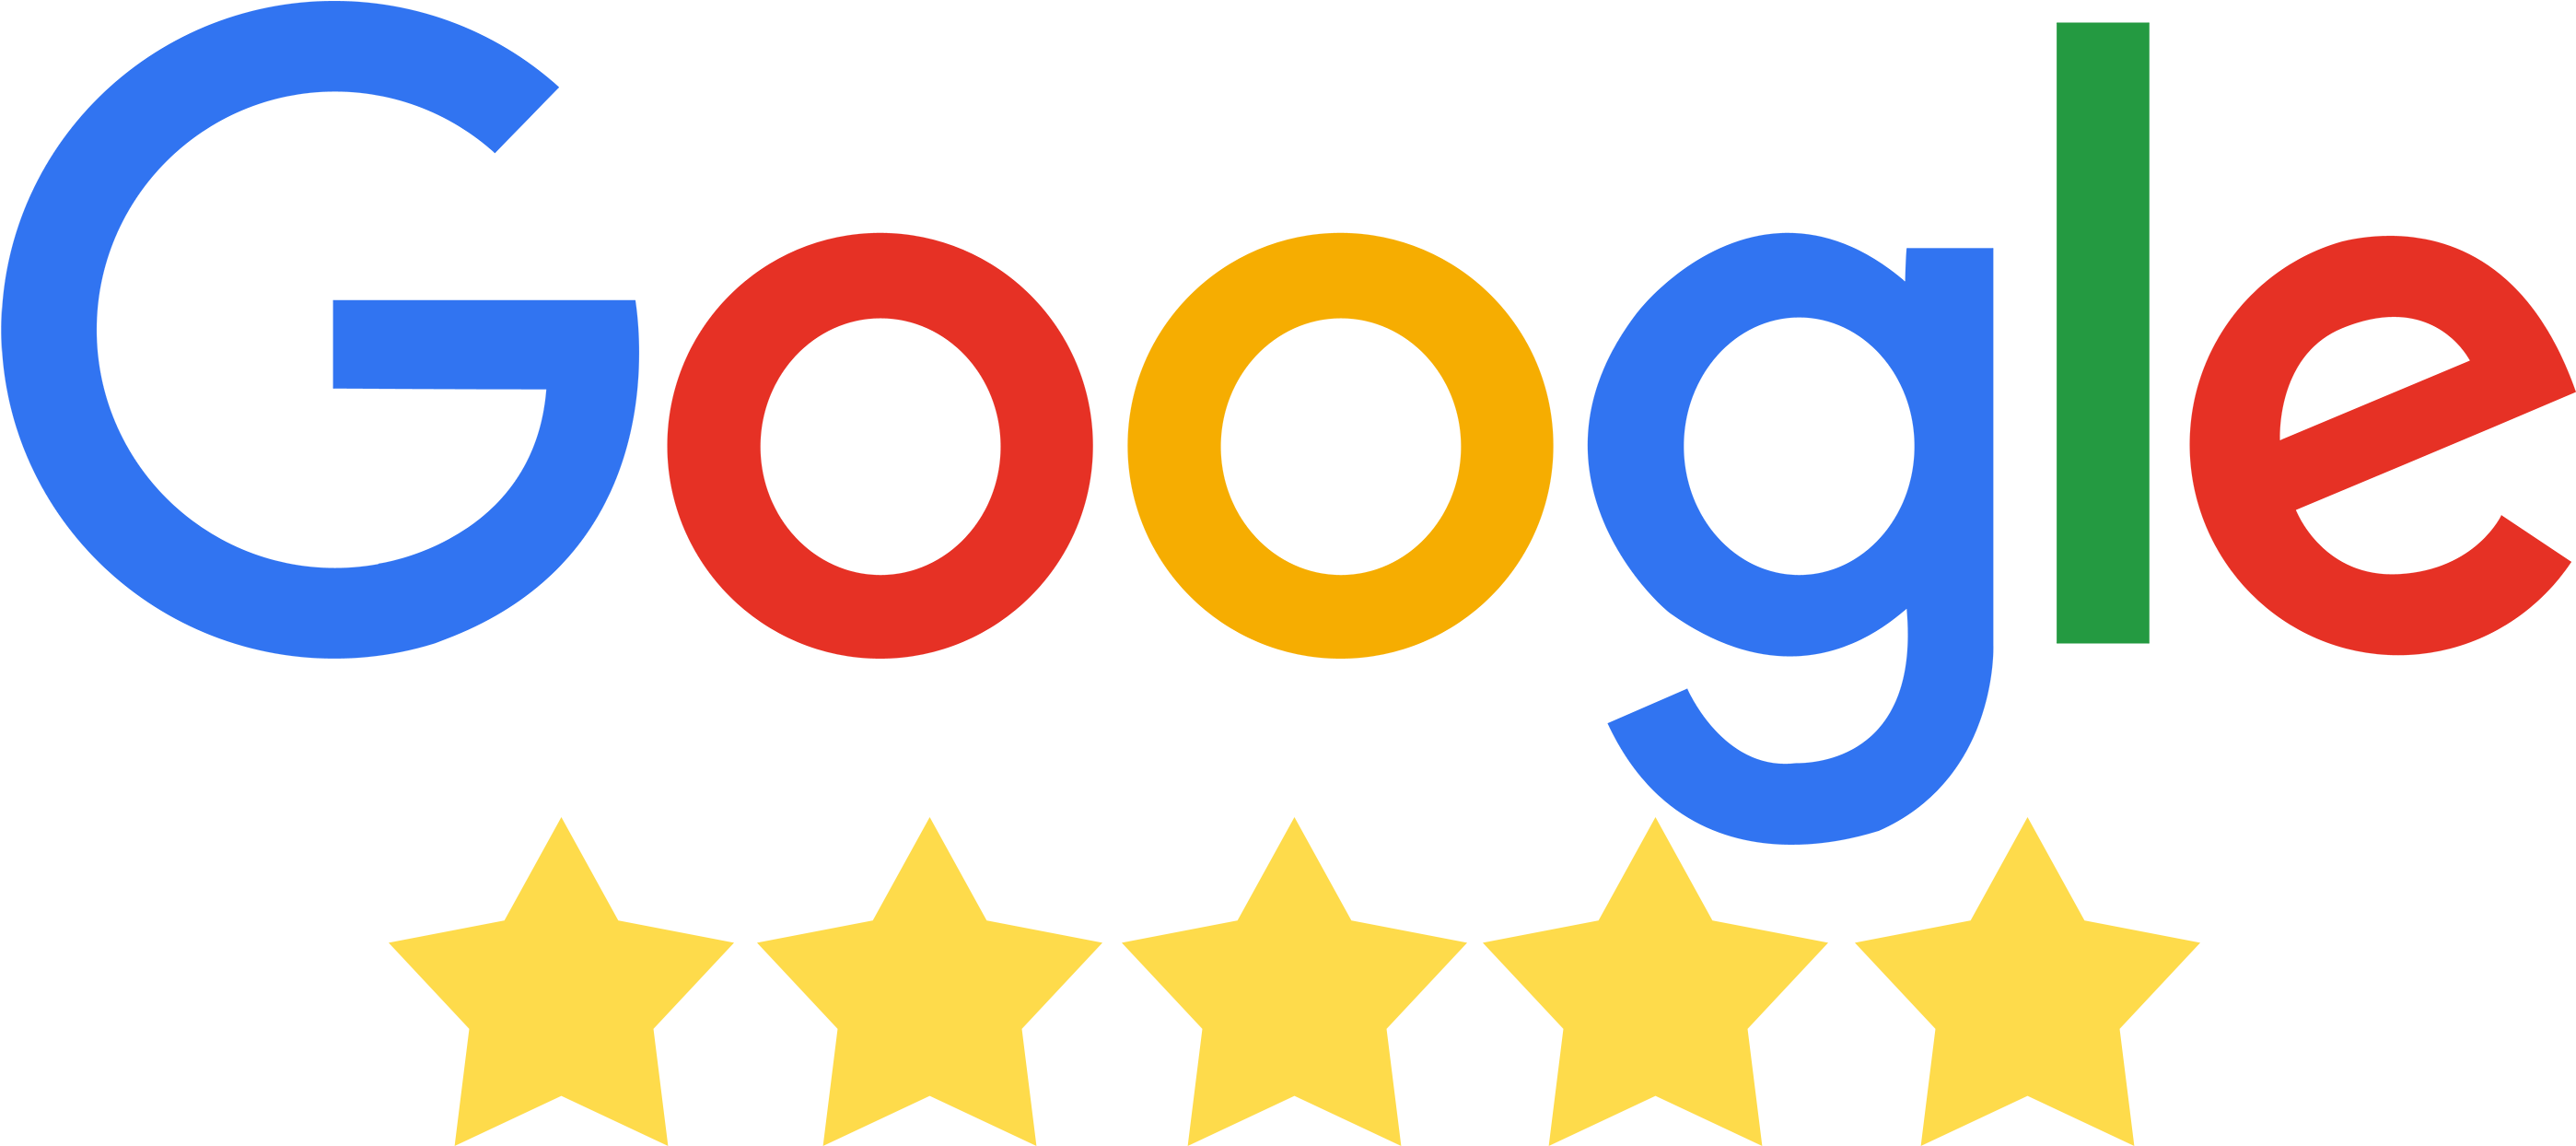 5 star google